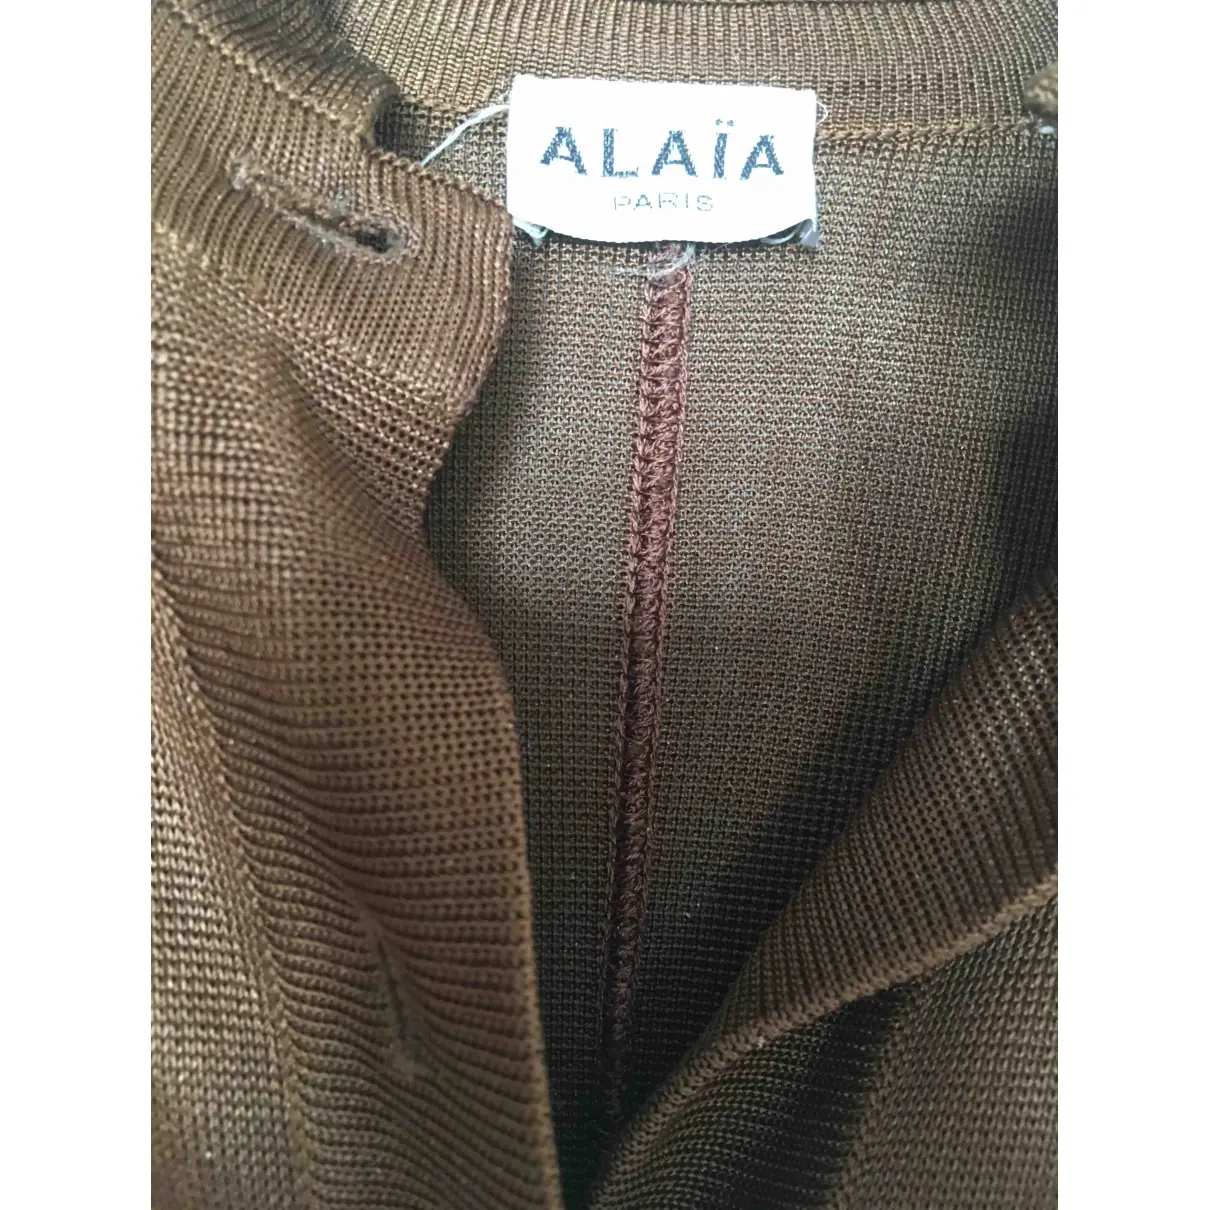 Alaïa Cardi coat for sale - Vintage